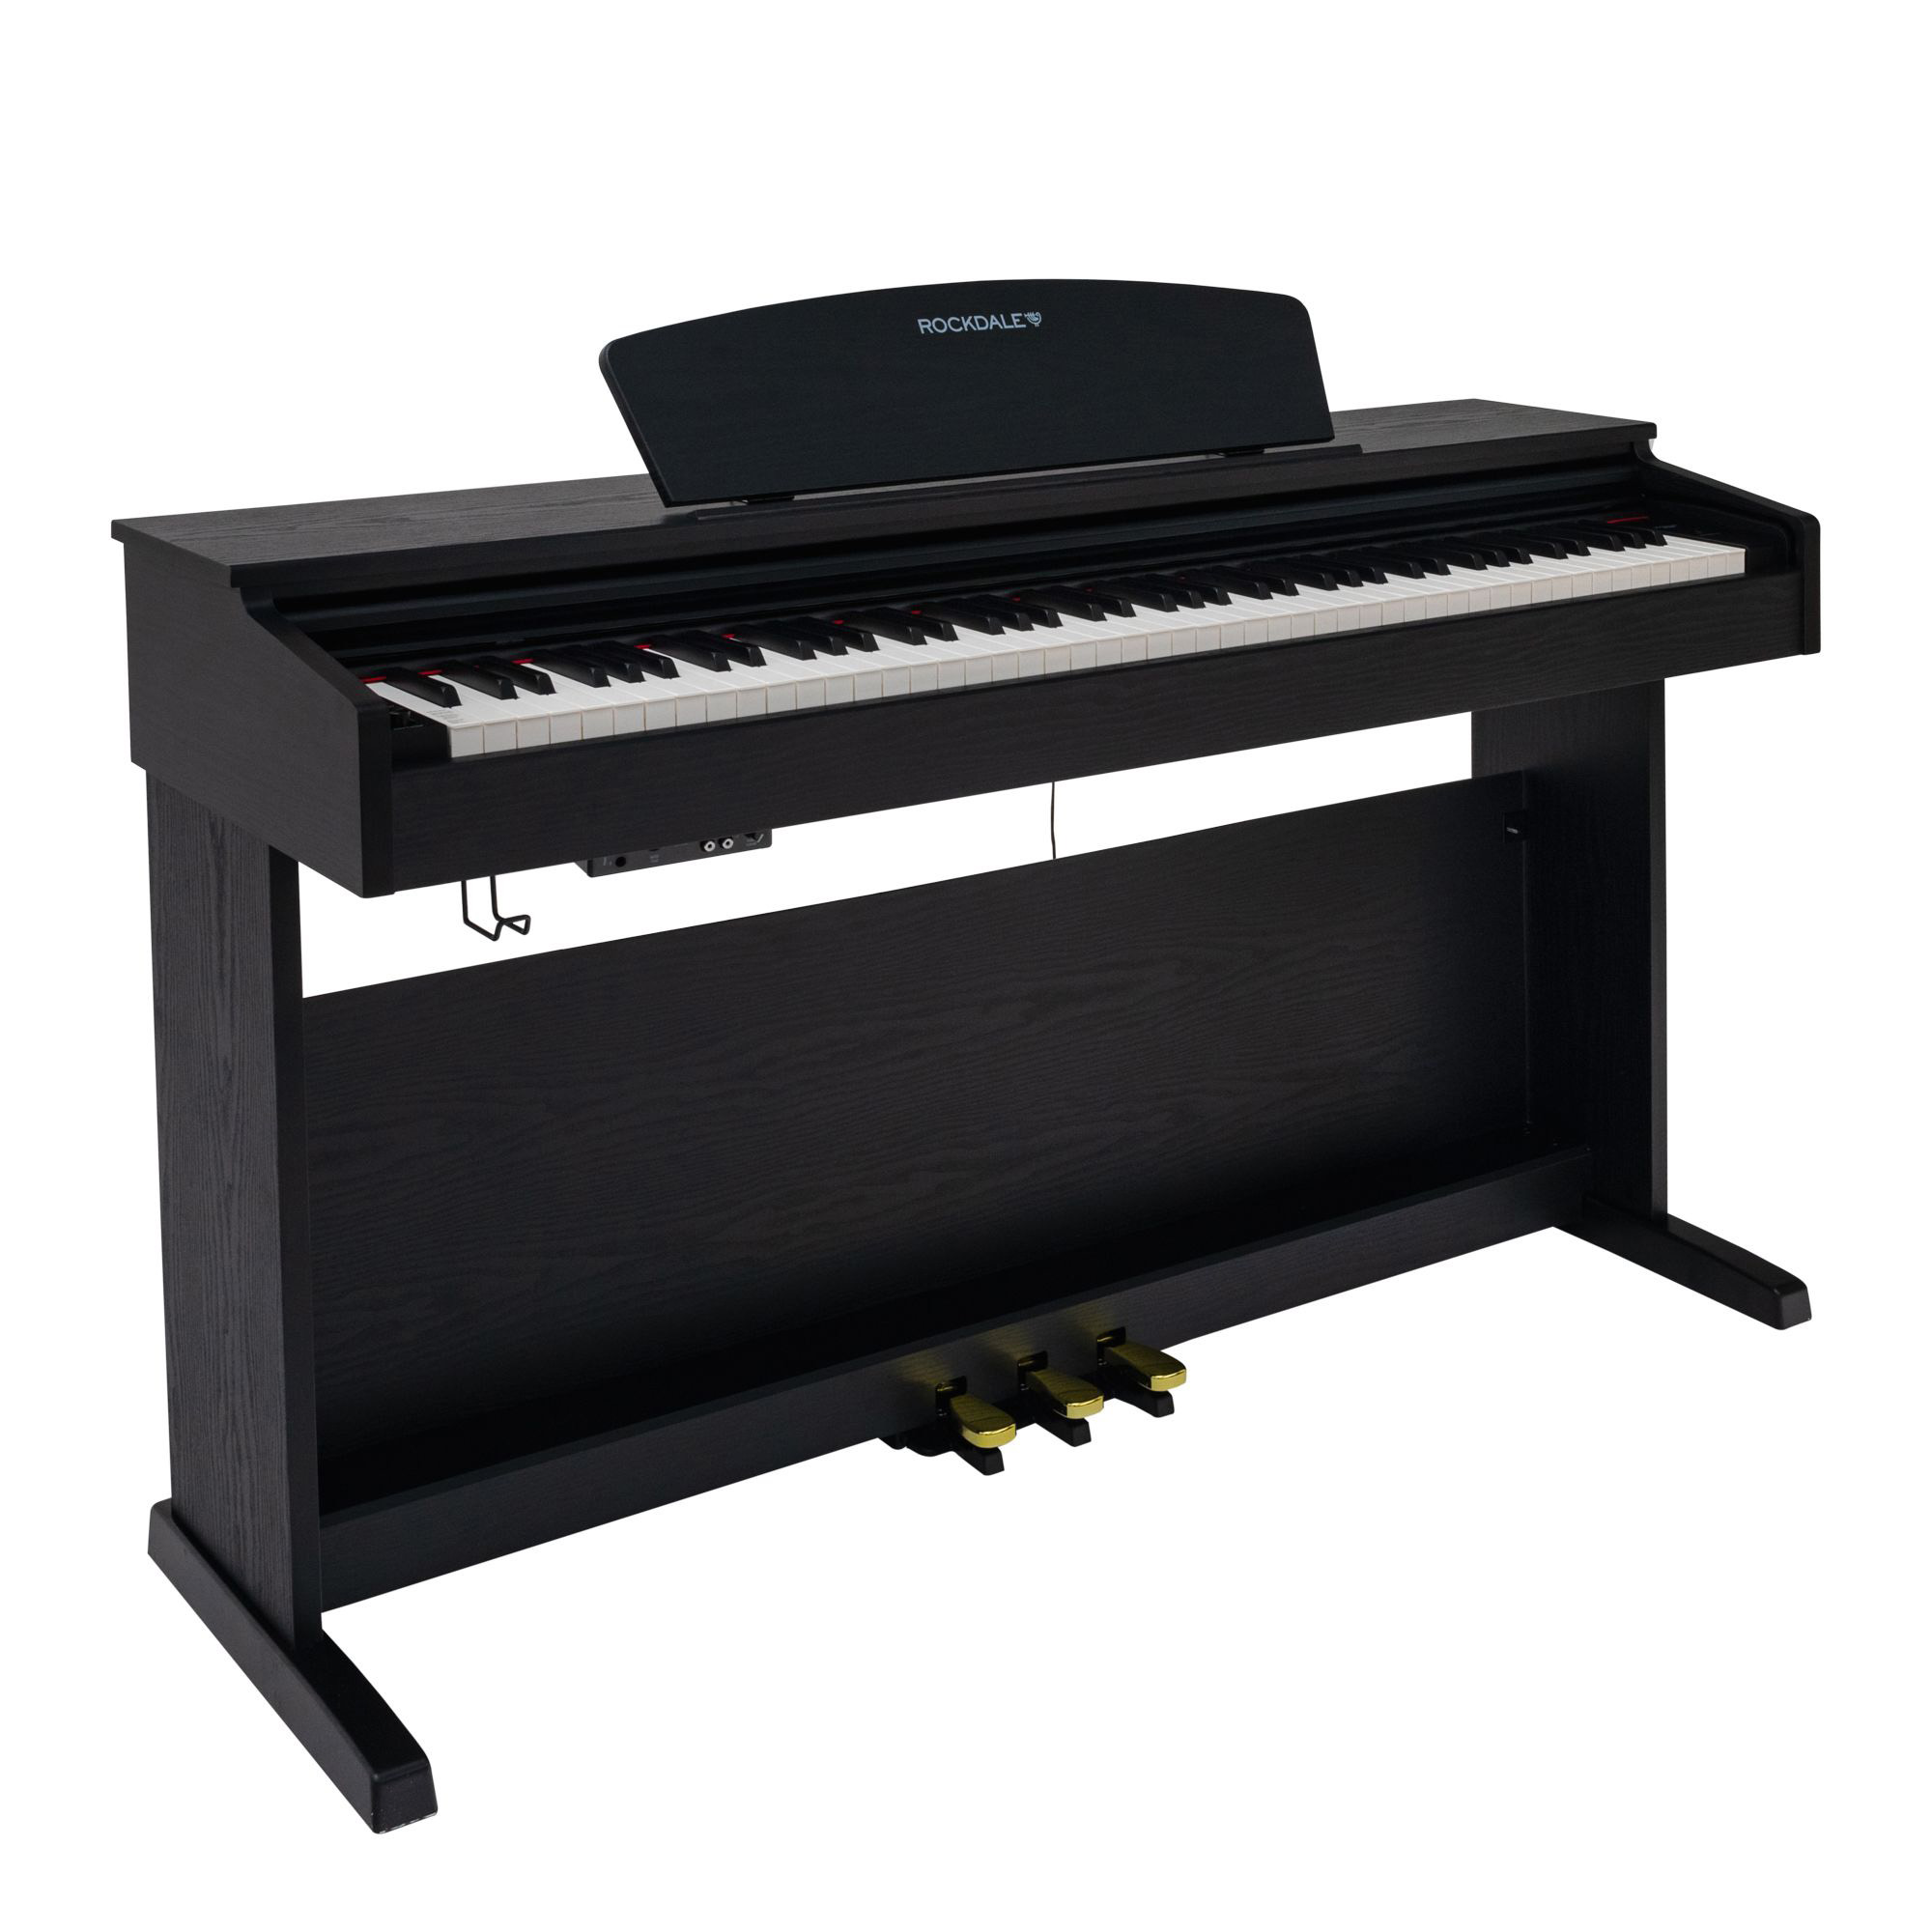 Rockdale Etude 128 Graded Black Цифровые пианино